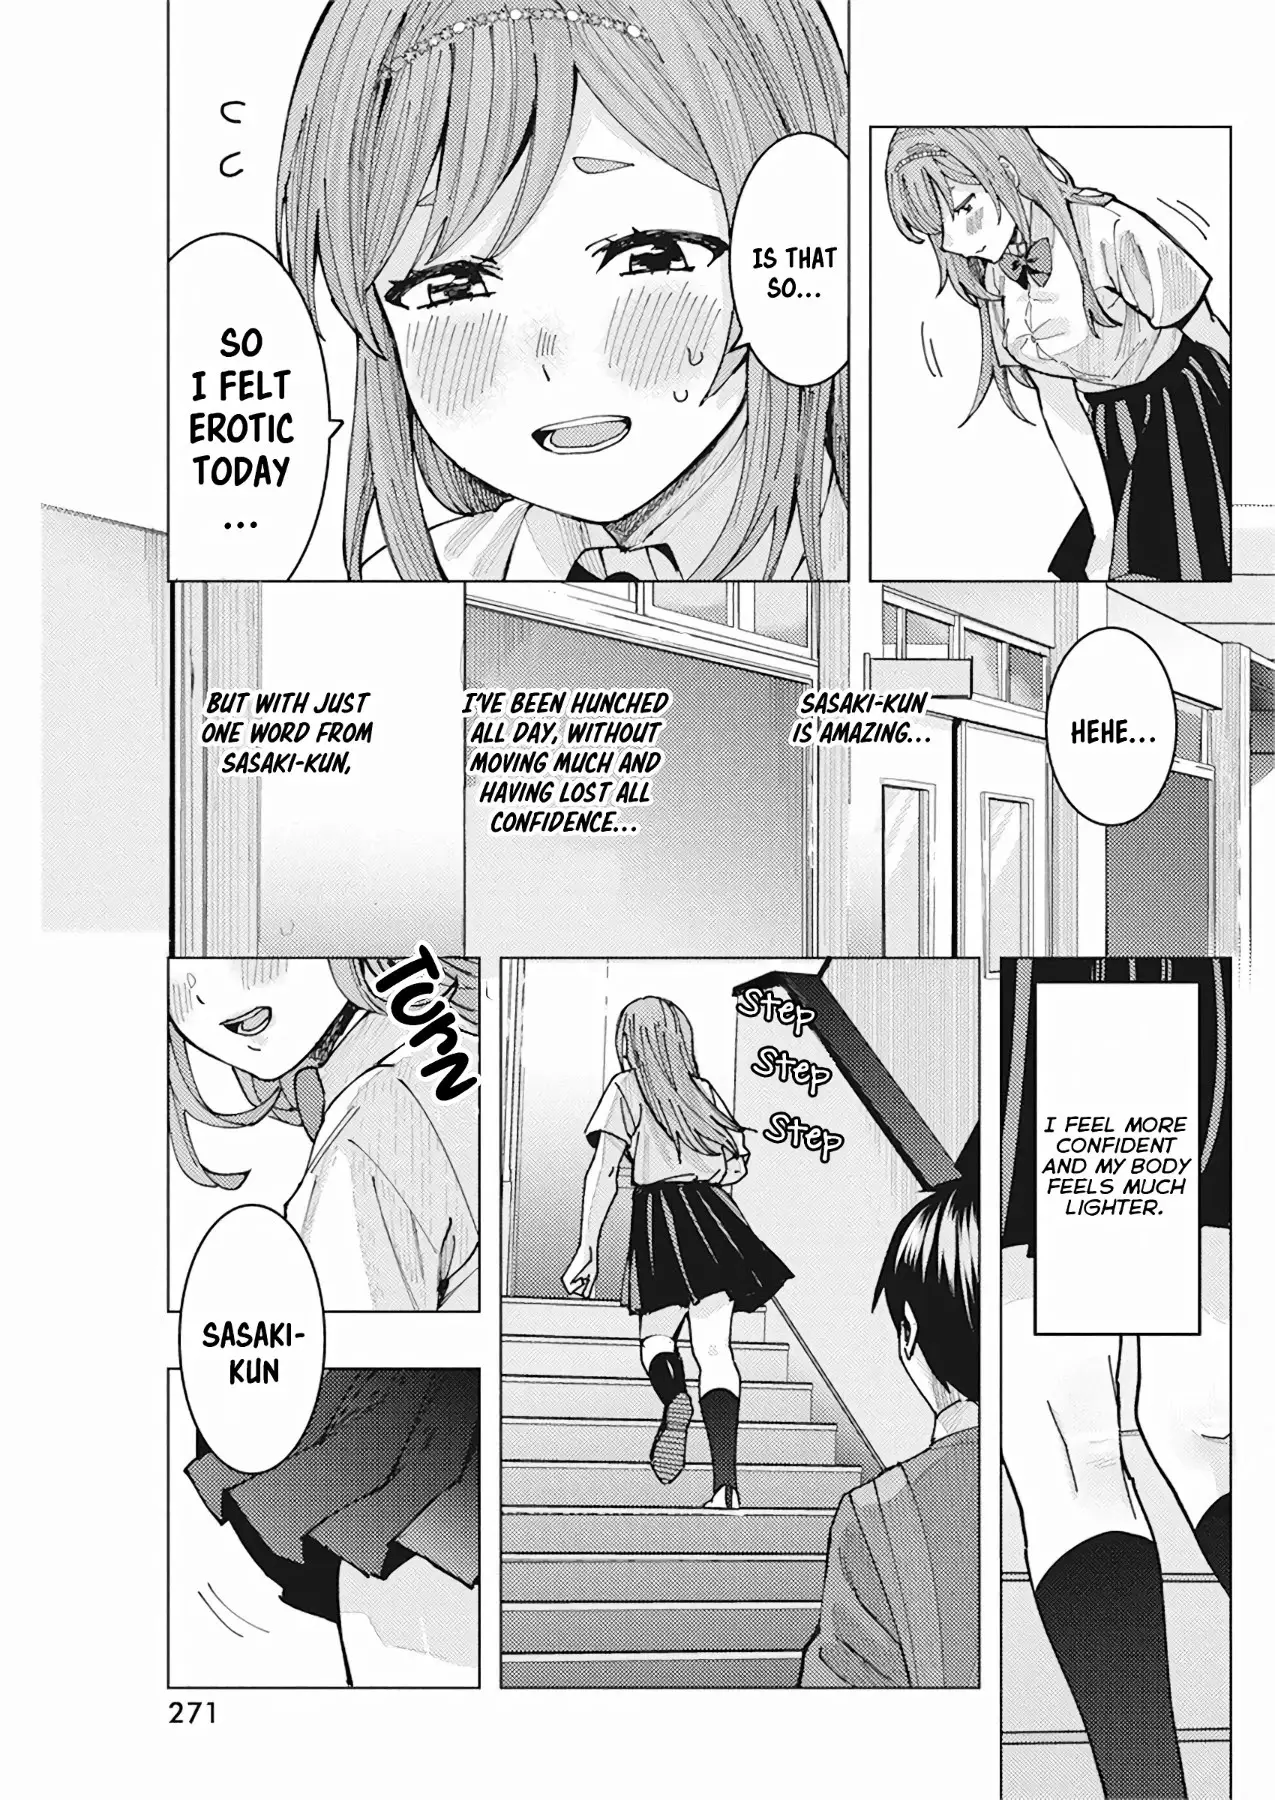 "nobukuni-San" Does She Like Me? - 8 page 16-4ad27d4c